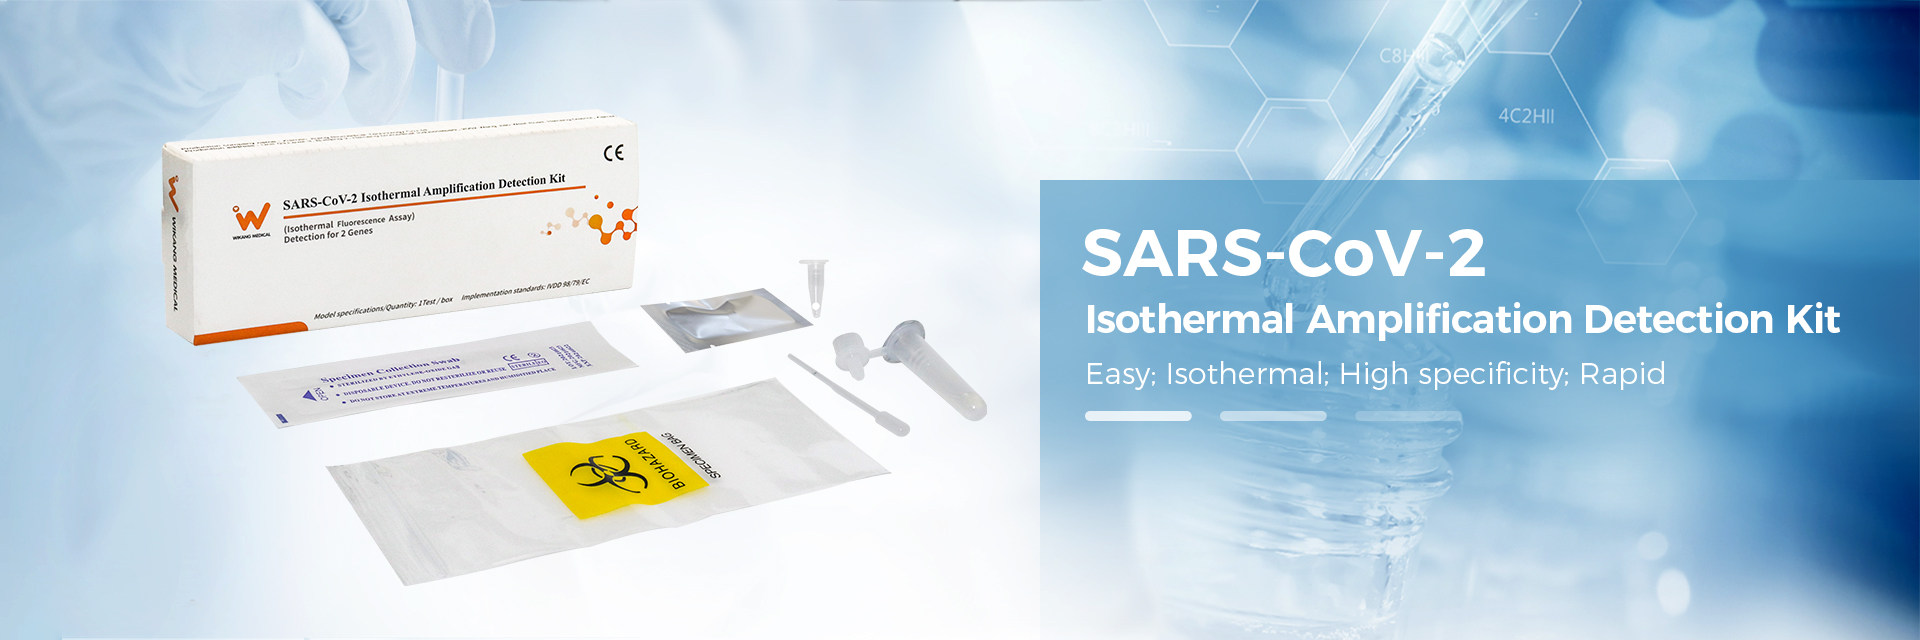 SARS-CoV-2 Isothermal Amplification Detection Kit